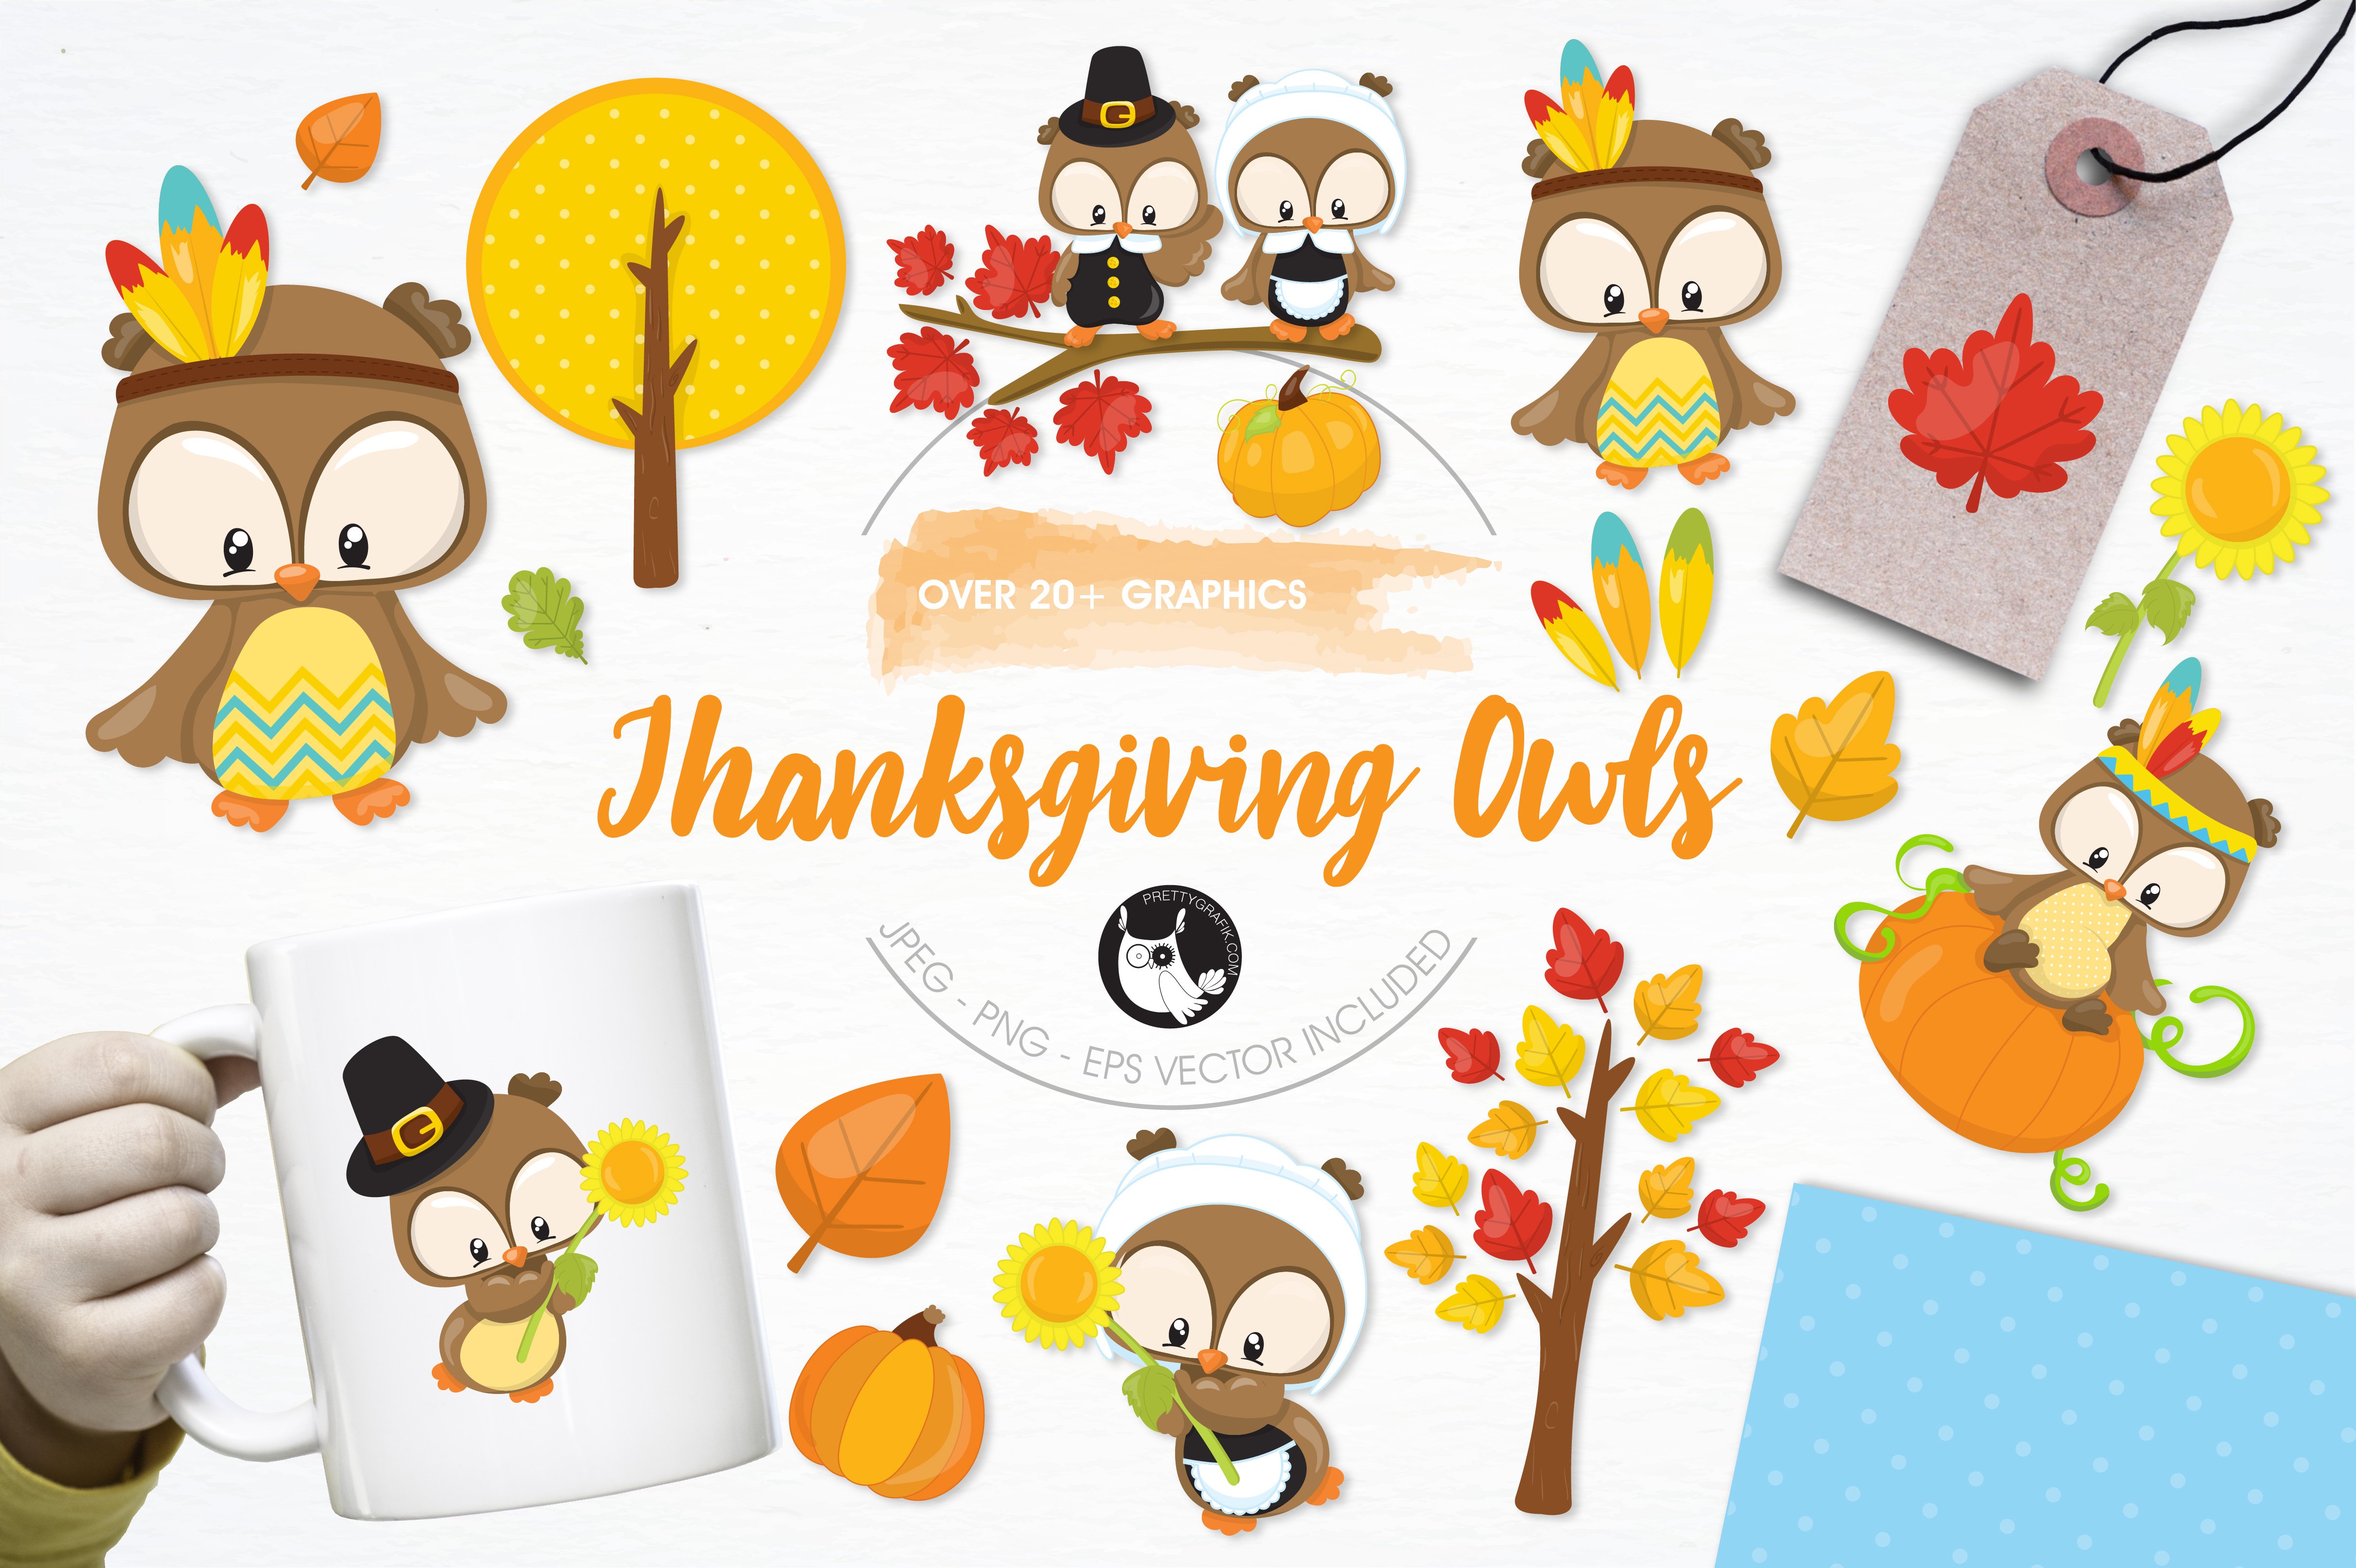 Thanksgiving owl illustration pack - Vector Image